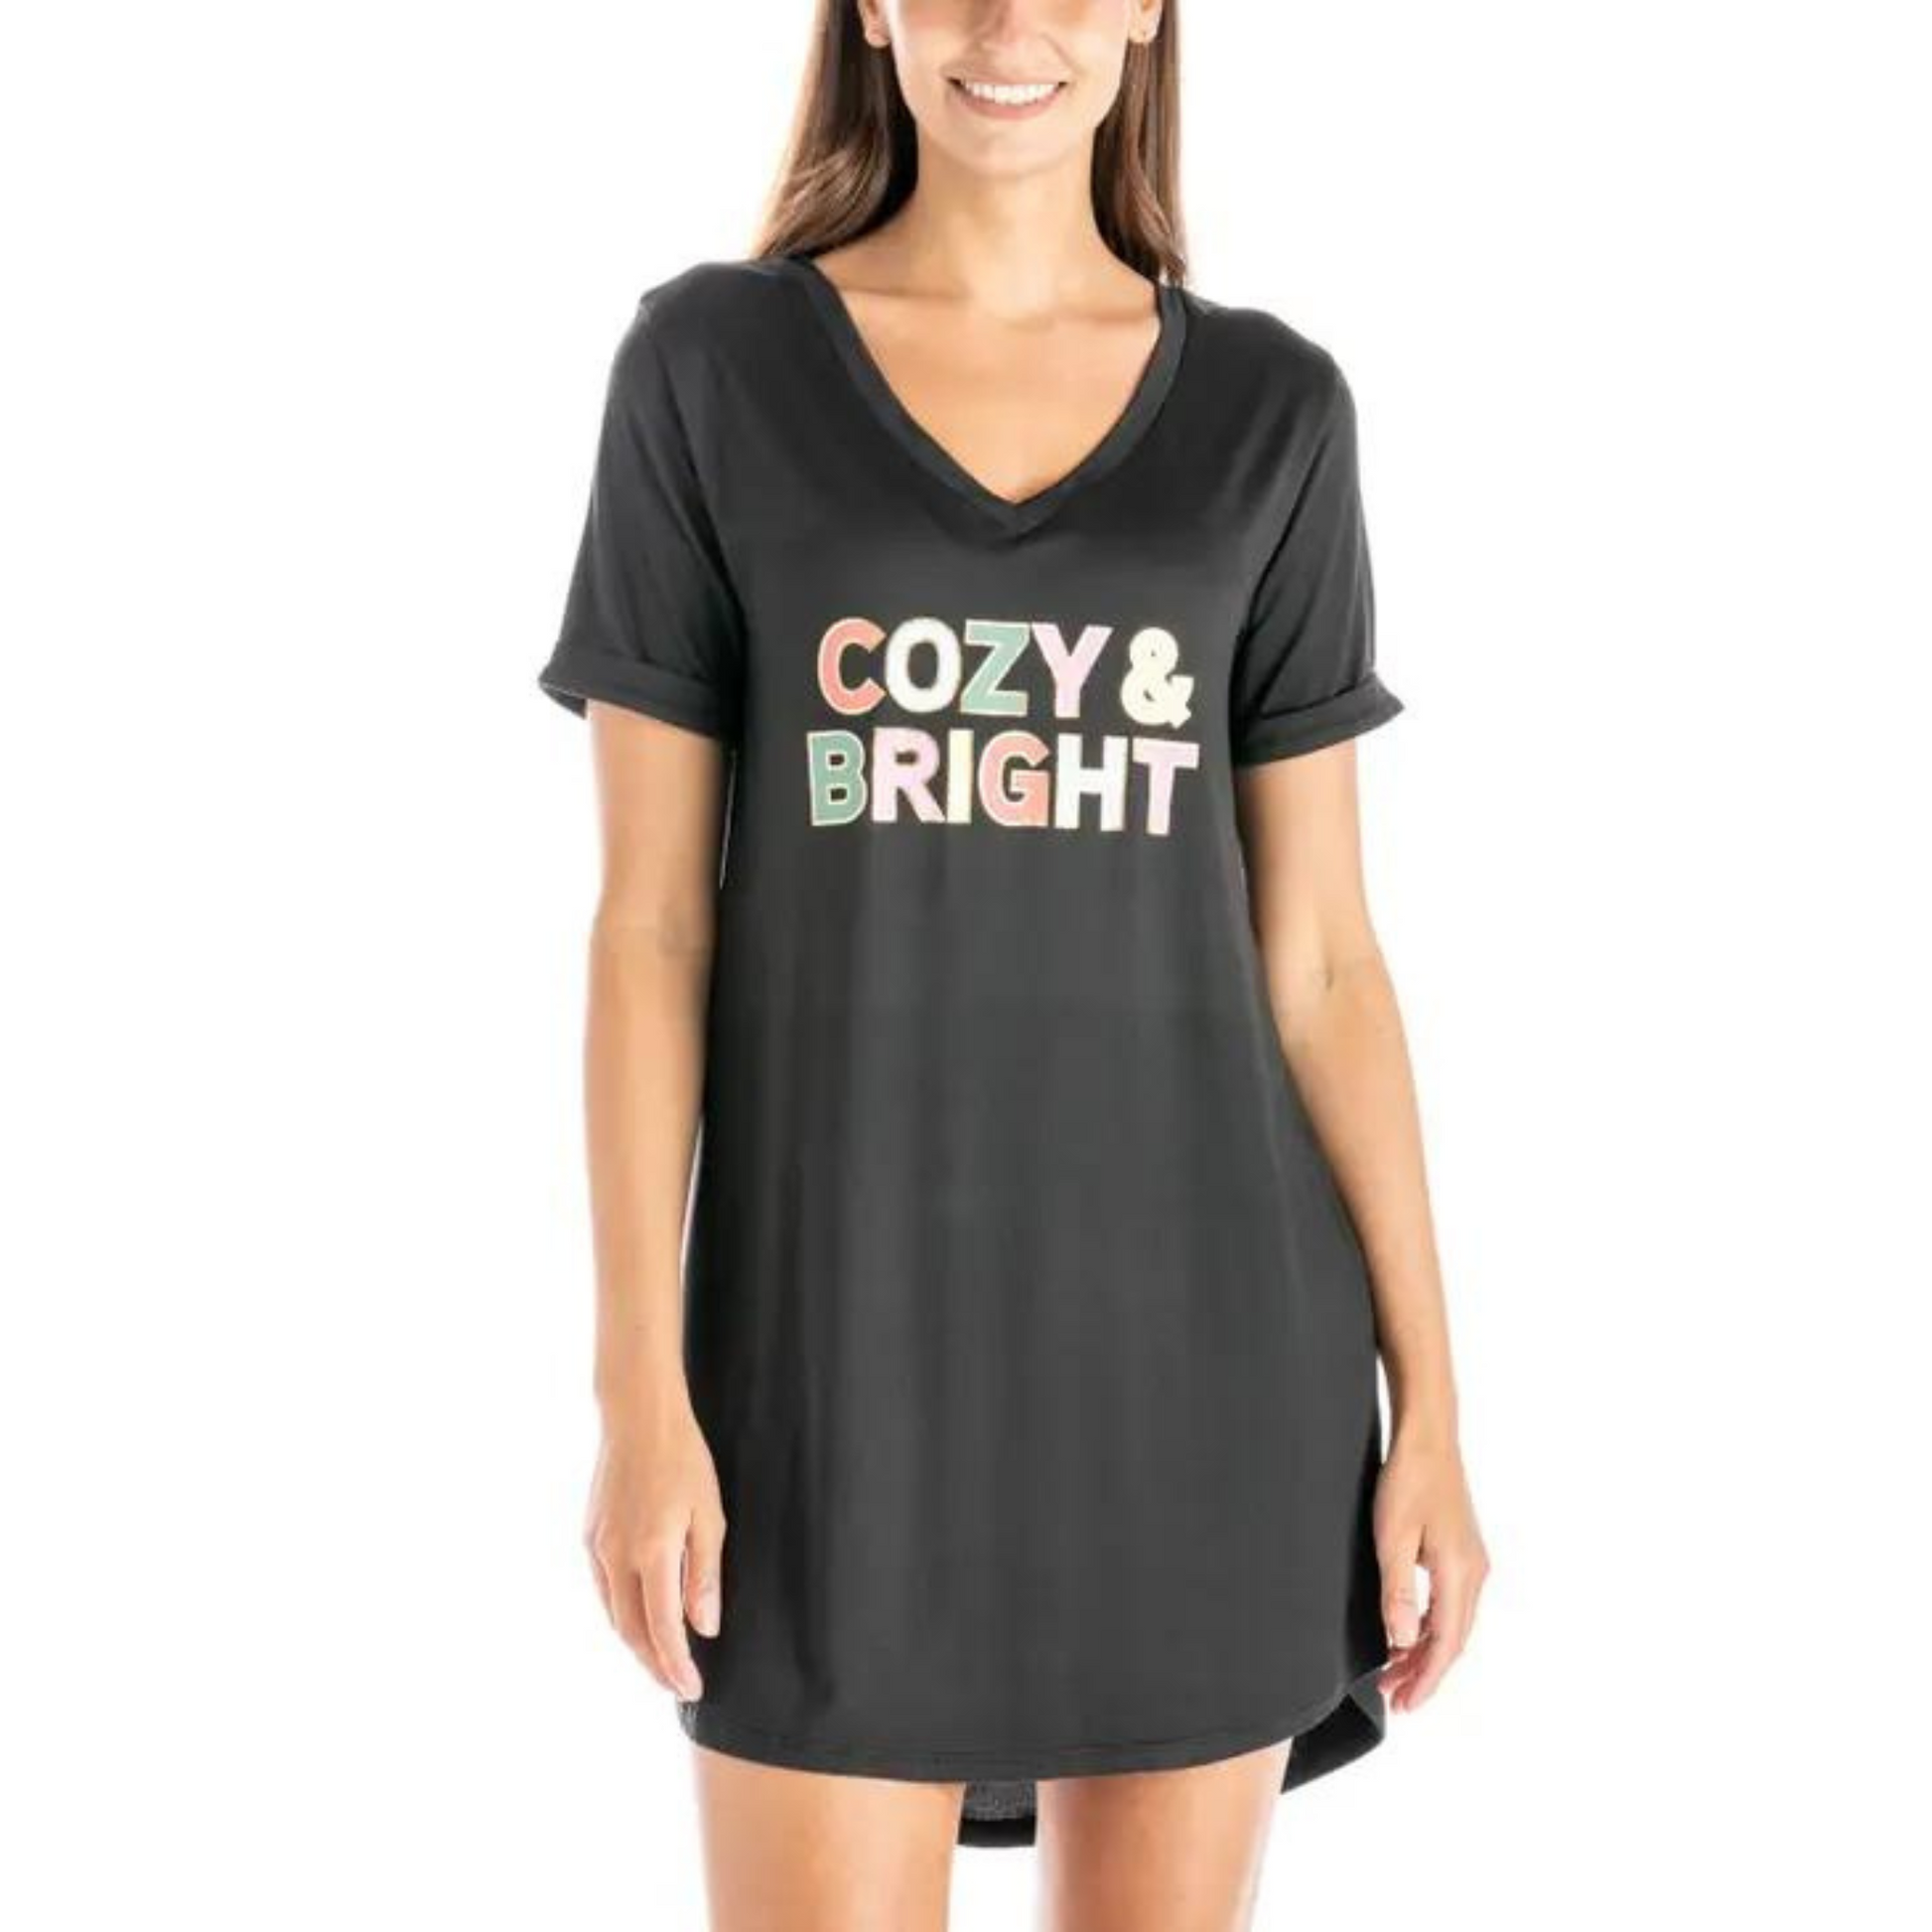 Black Christmas sleep shirt with "Cozy & Bright" graphic